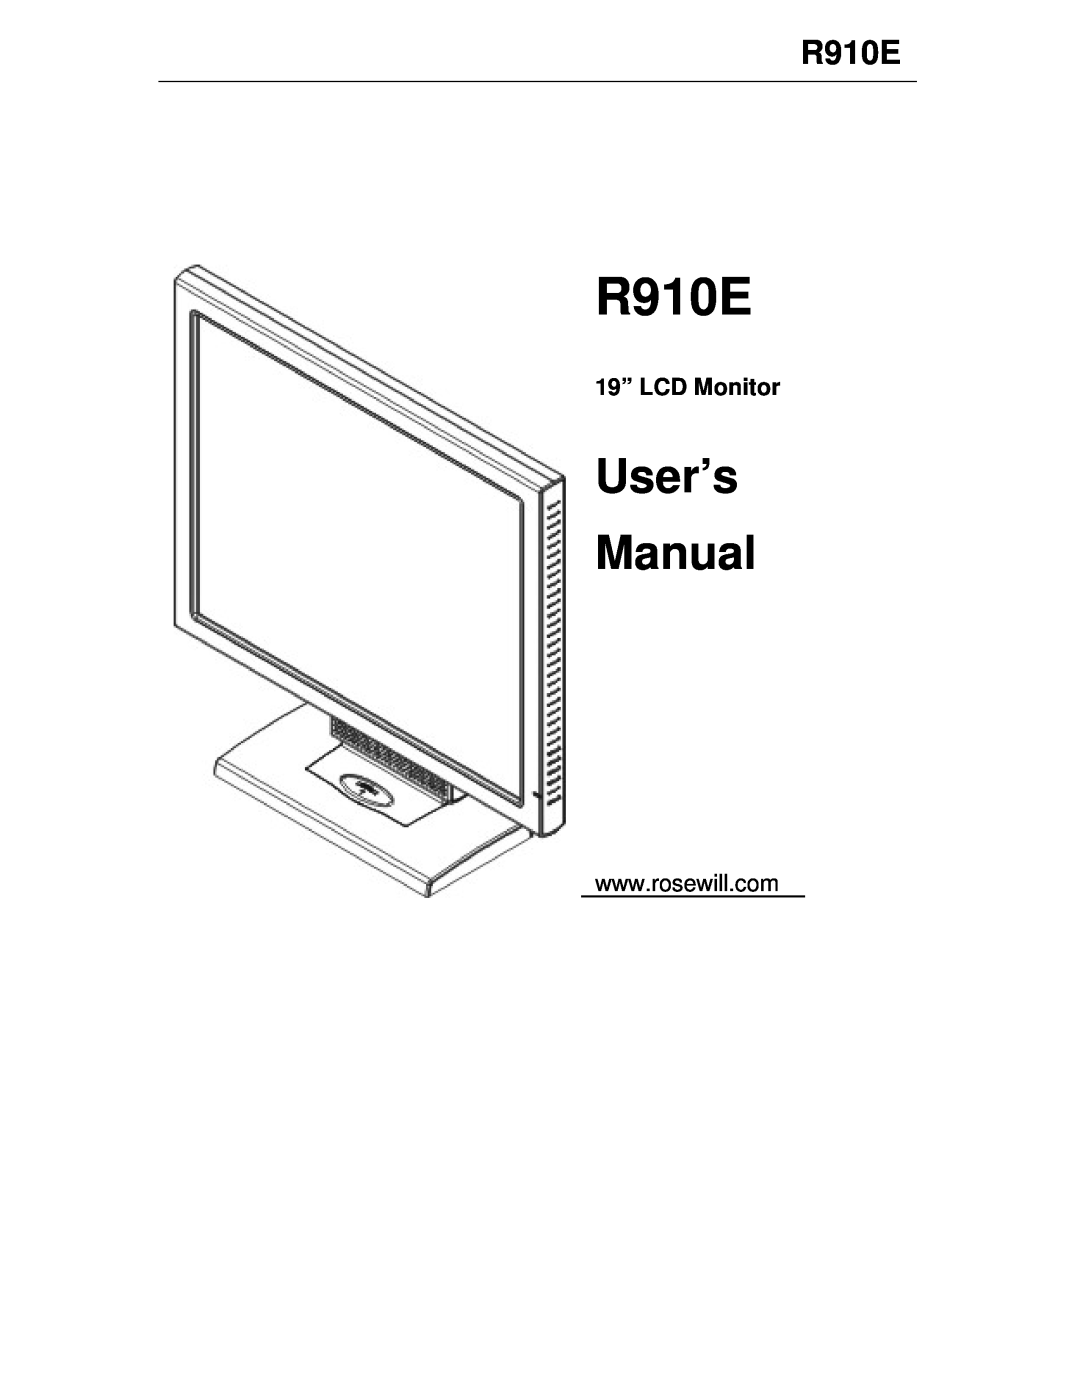 Rosewill R910E user manual 19” LCD Monitor, User’s Manual 